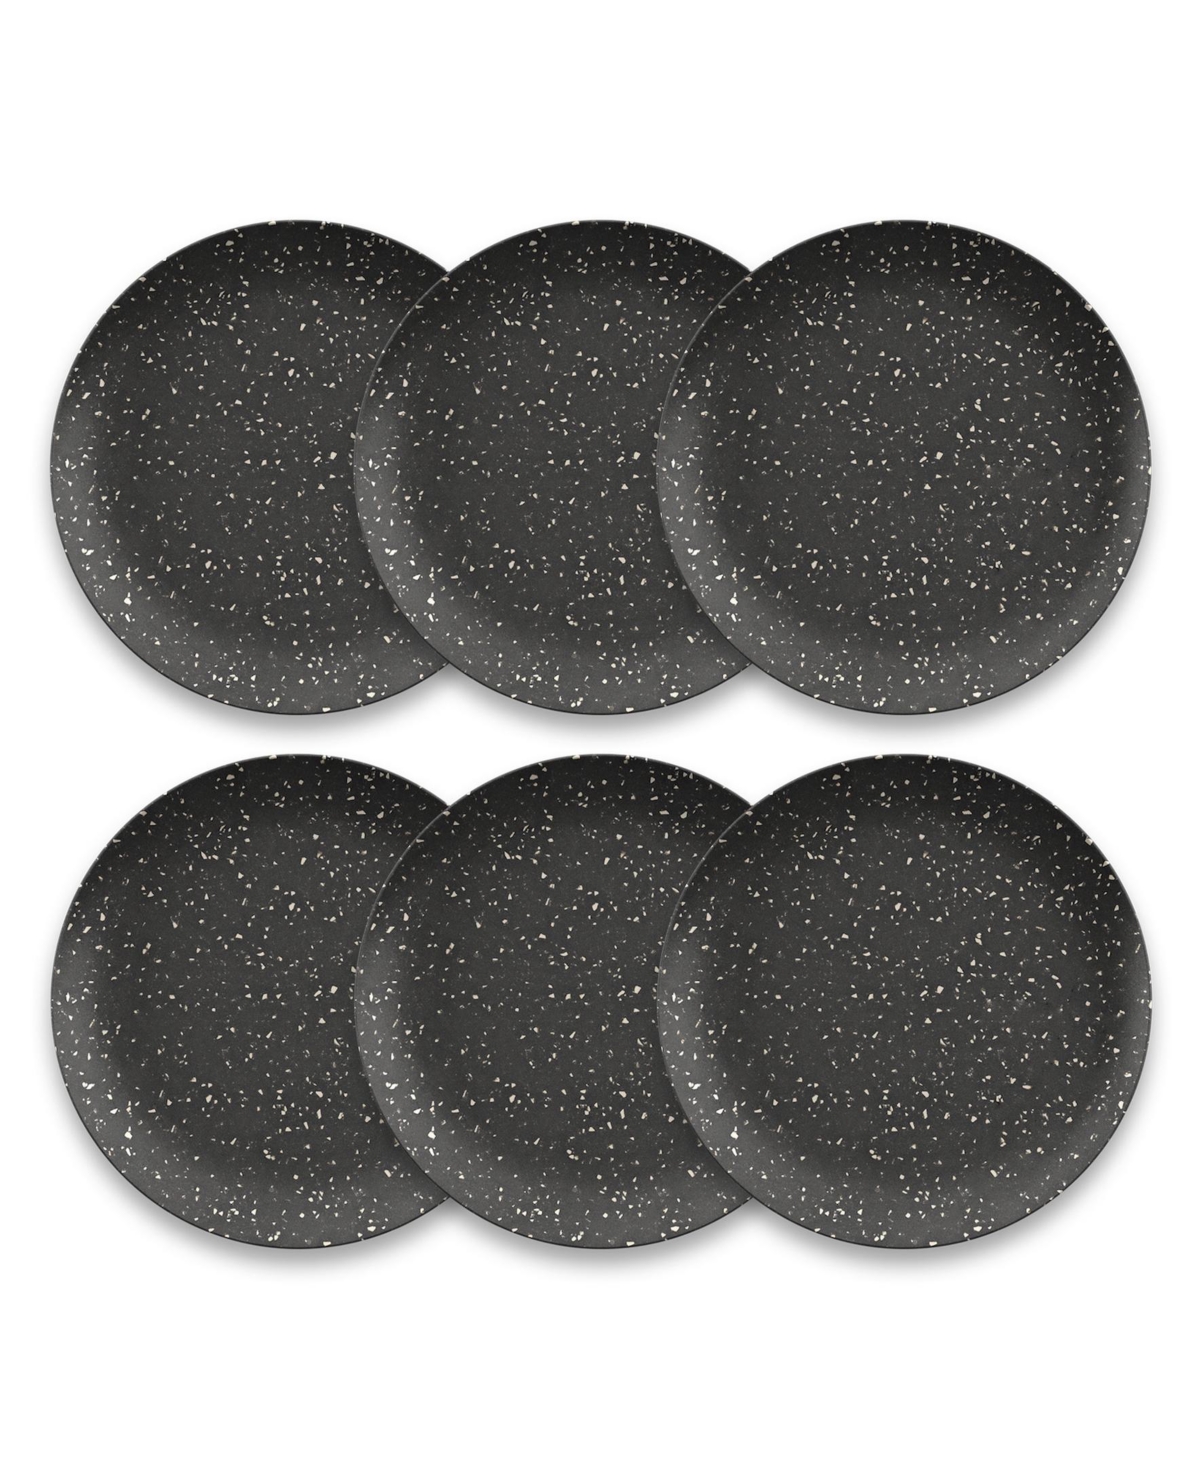 Orion Speckles 6-Piece Dinner Plate Set, 10.5" - Black